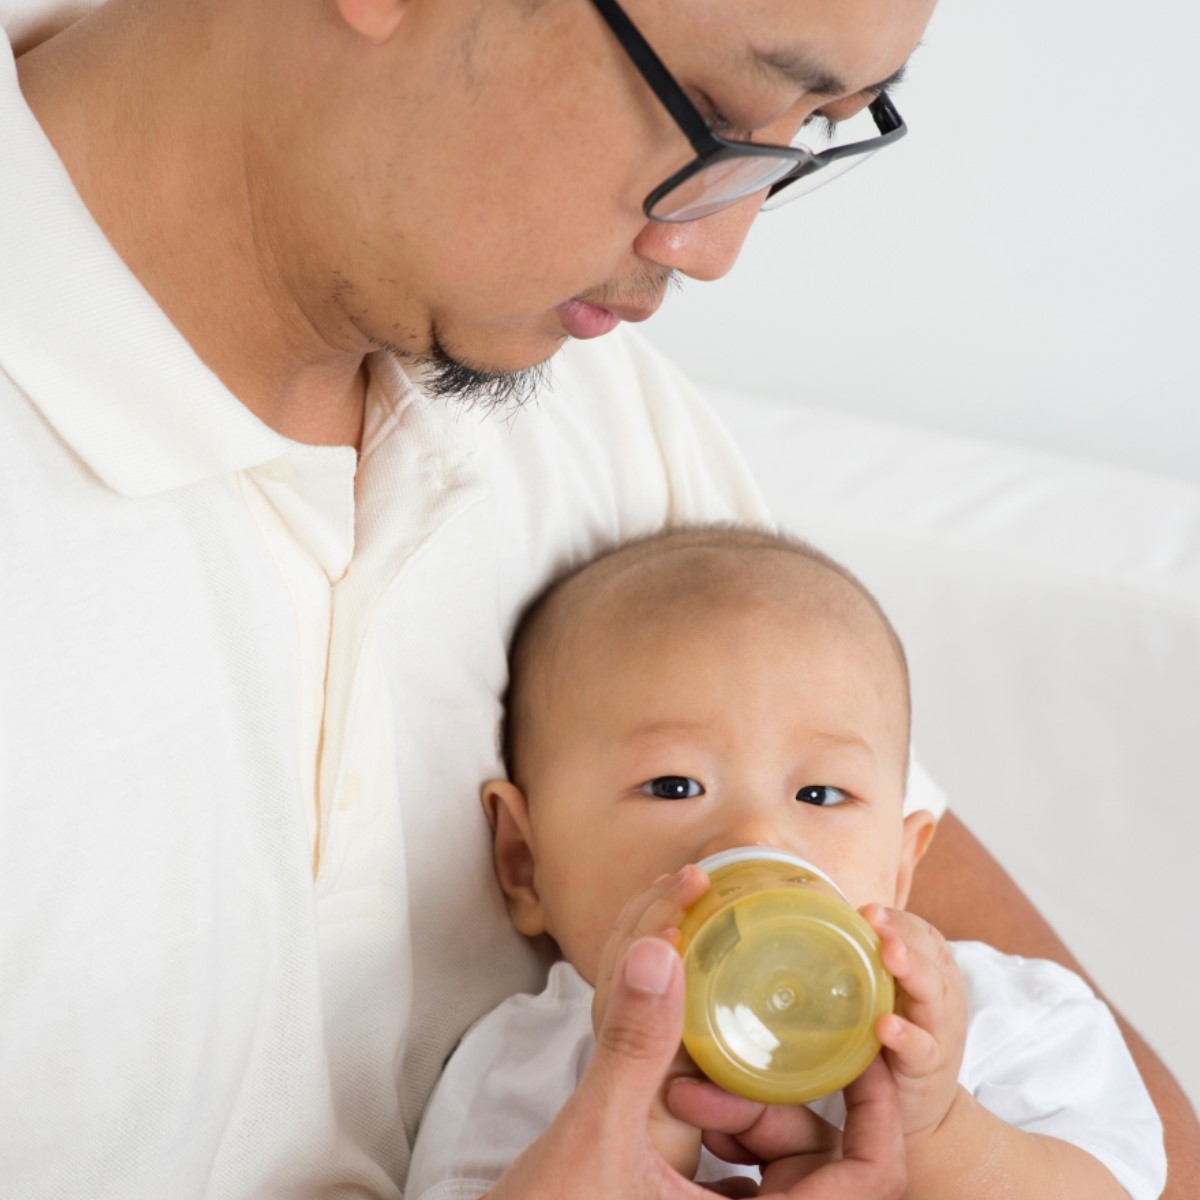 Parent bottle feeding a baby